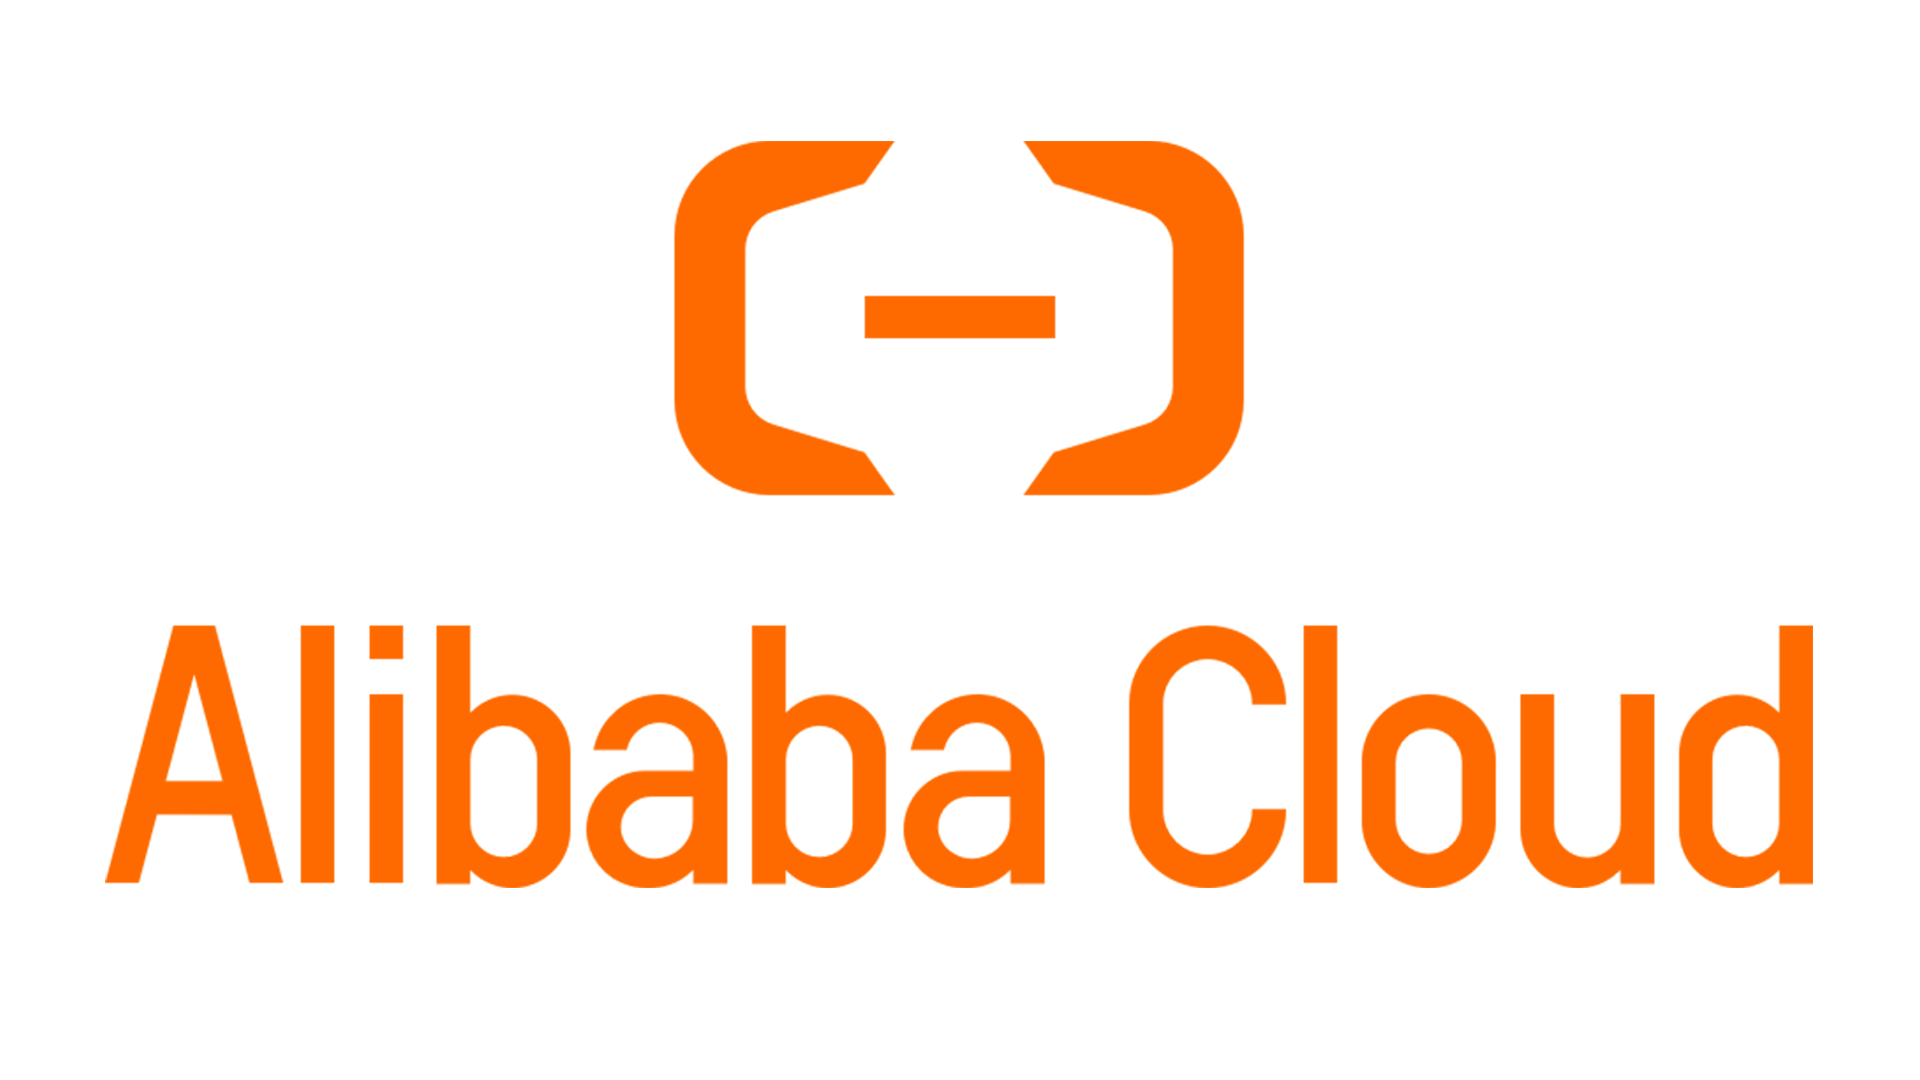 WHOIS lookup - Domain Names - Alibaba Cloud Documentation Center